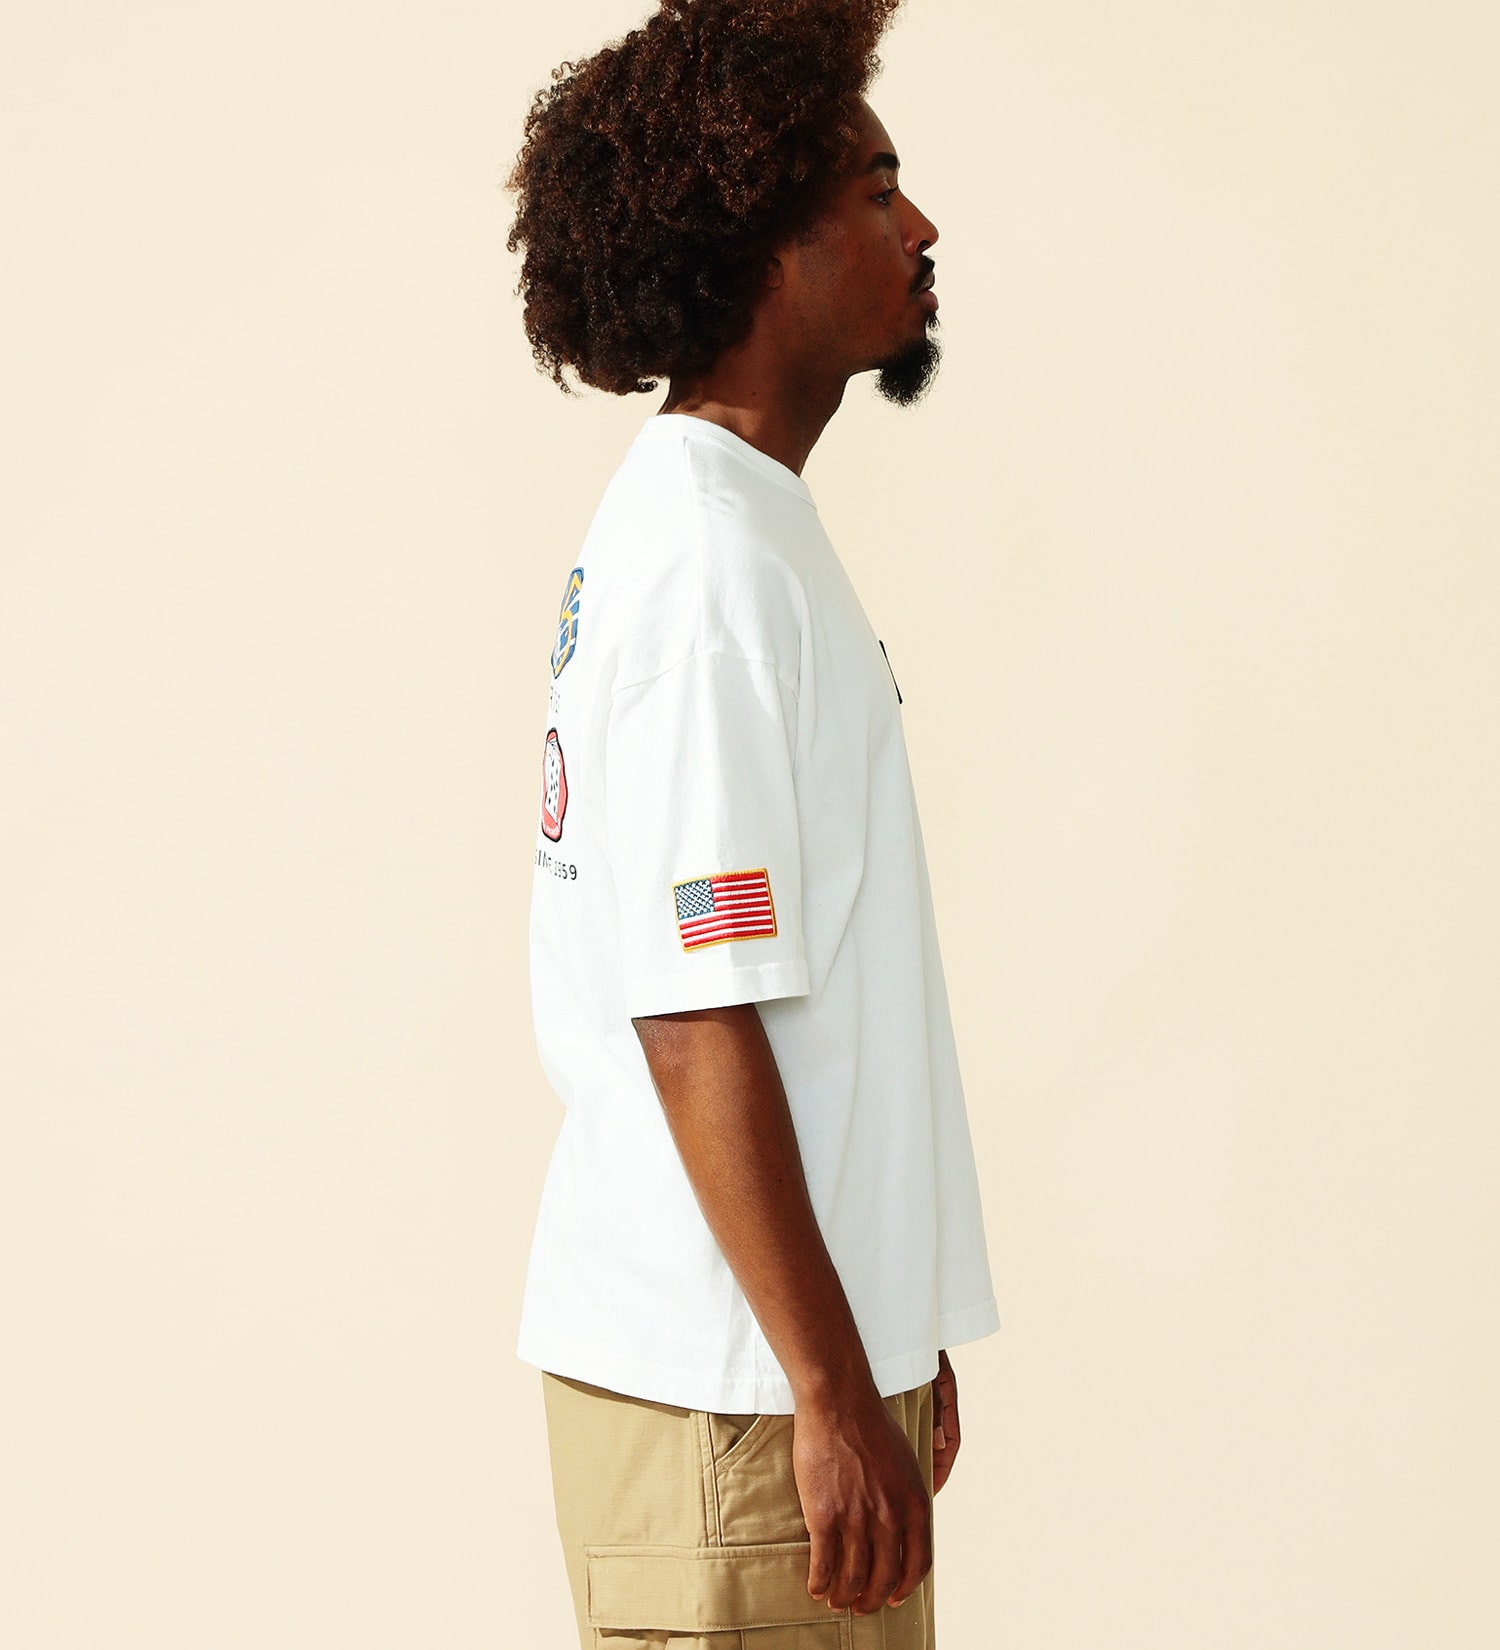 ALPHA(アルファ)のスクアドロンプリントパッチTシャツ 半袖|トップス/Tシャツ/カットソー/メンズ|ホワイト